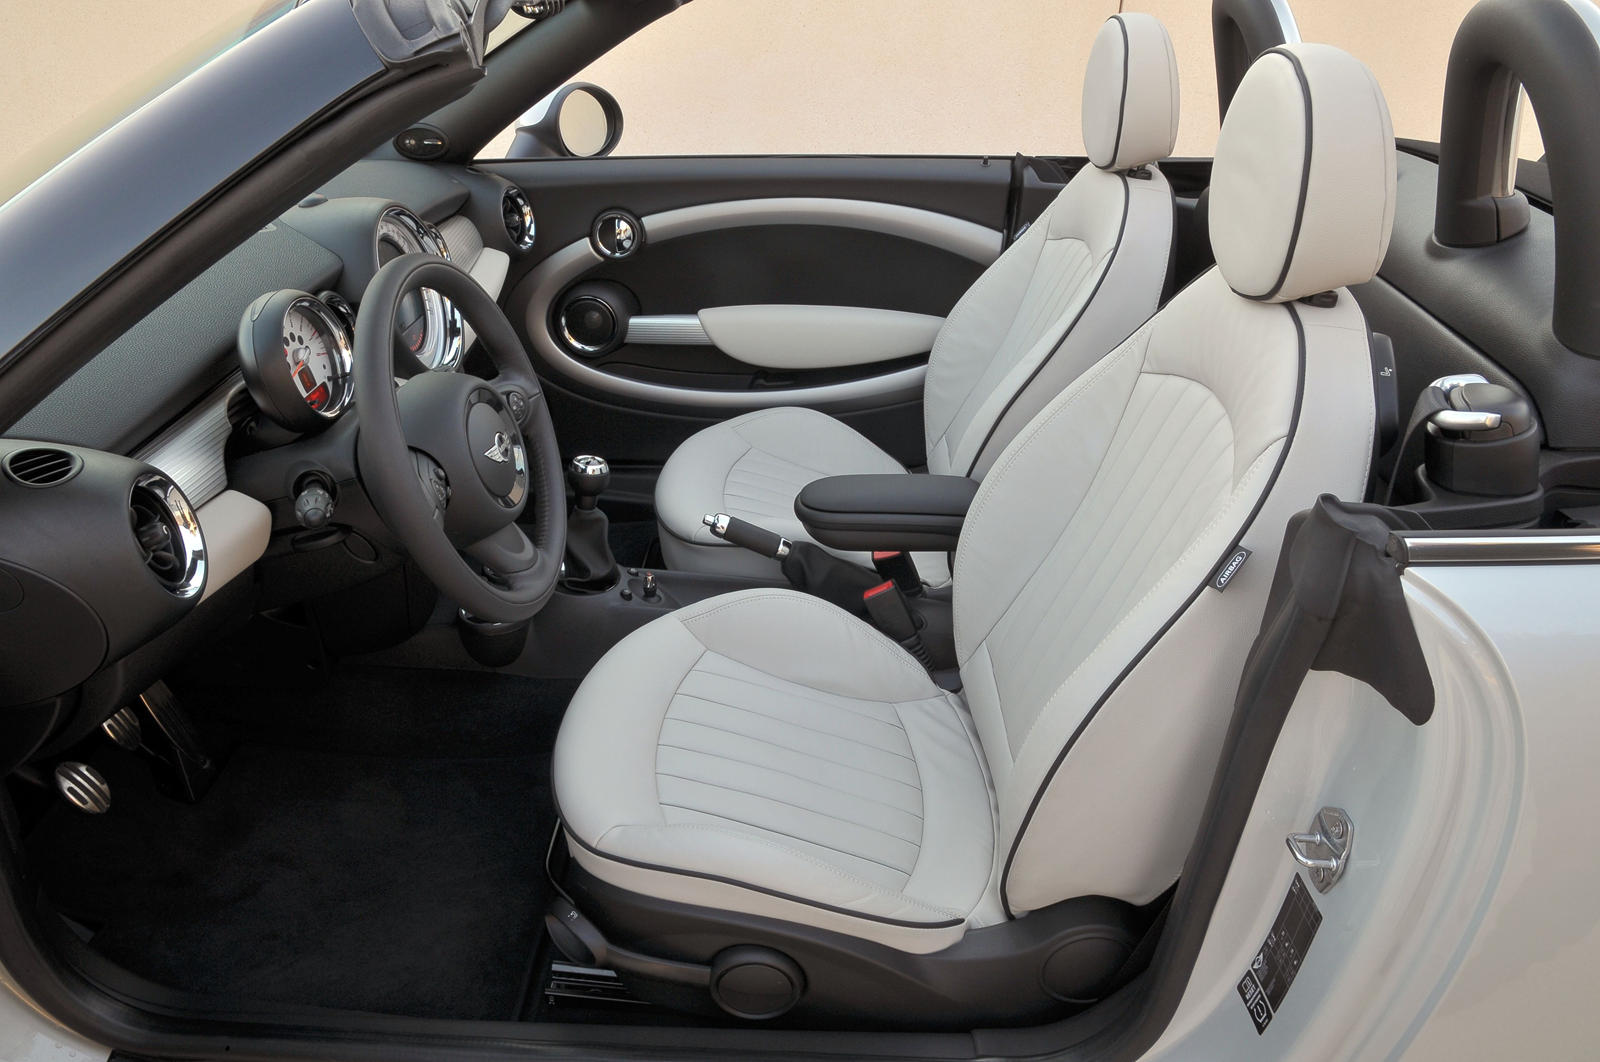 Mini Cooper Roadster interior - Seats